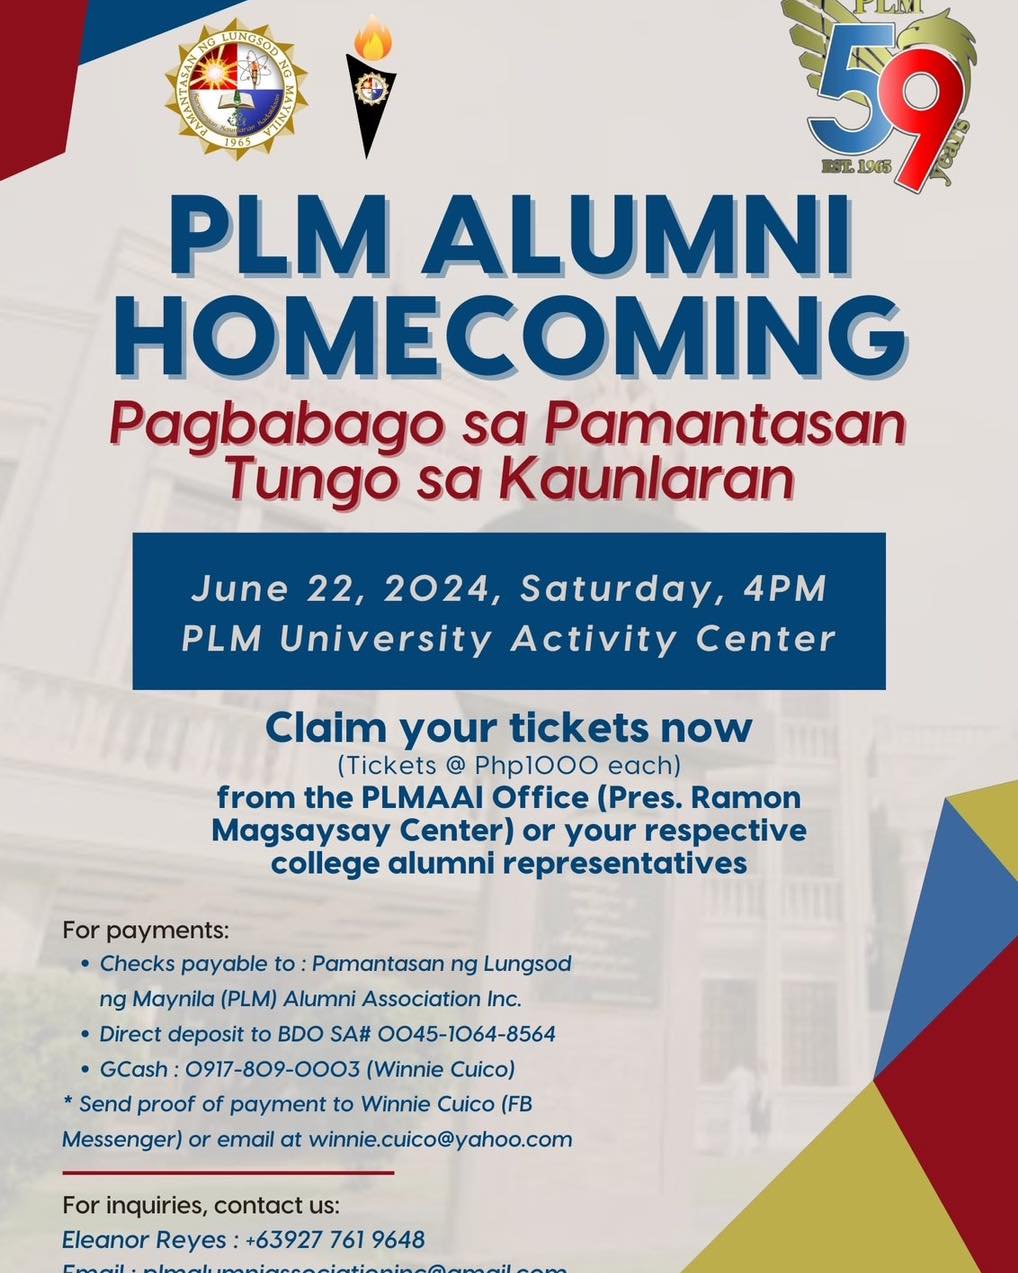 Calling all PLM Alumni